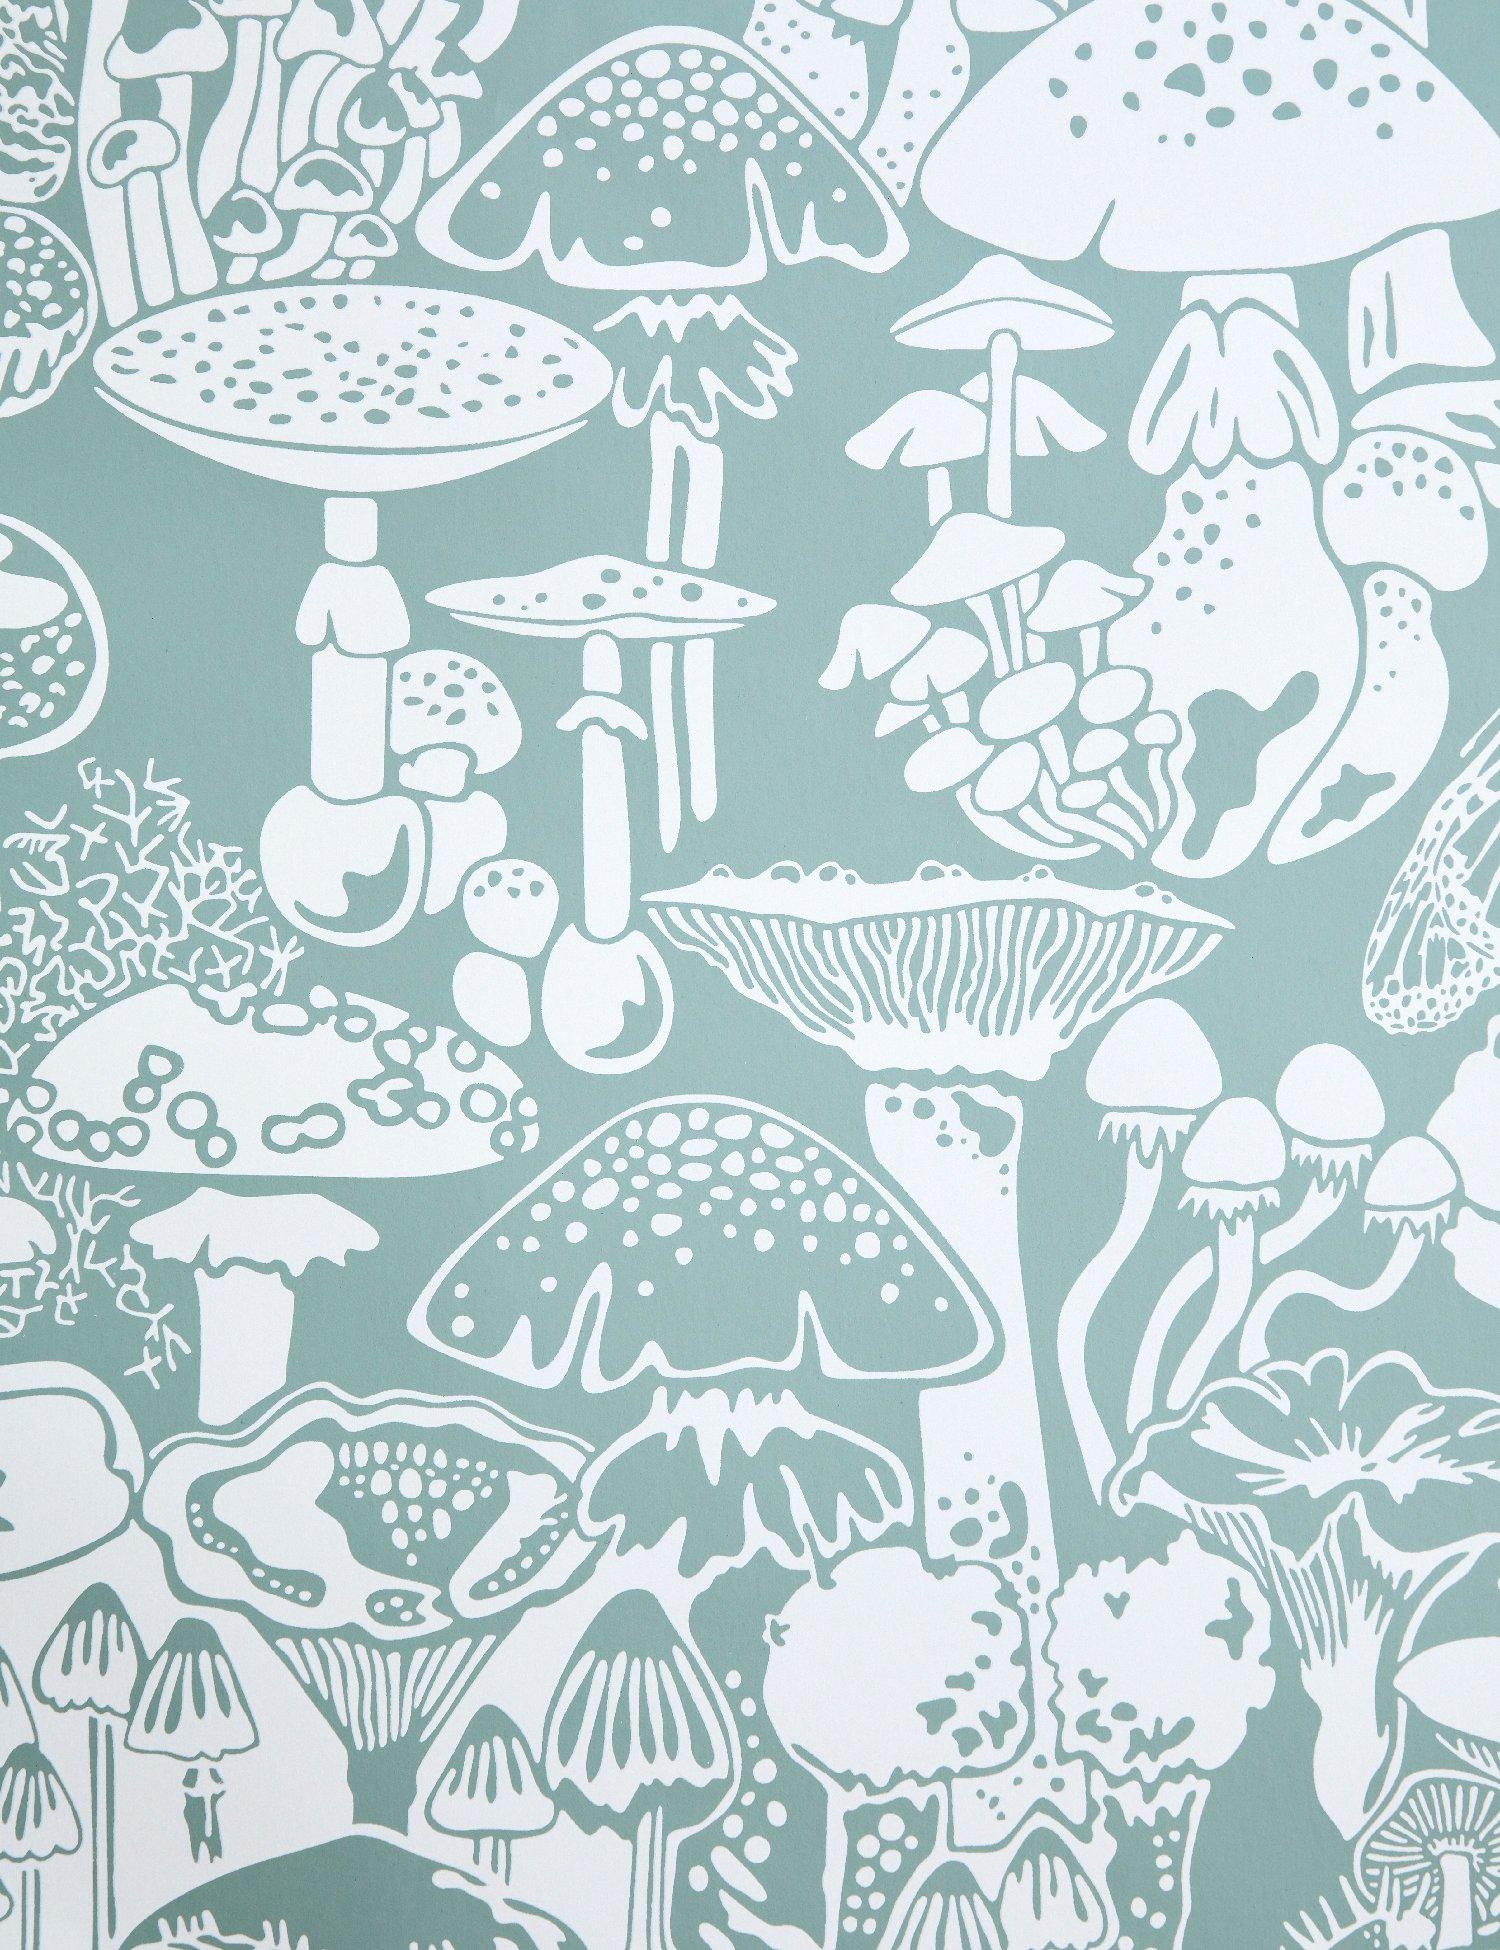 Mushrooms art HD phone wallpaper  Peakpx